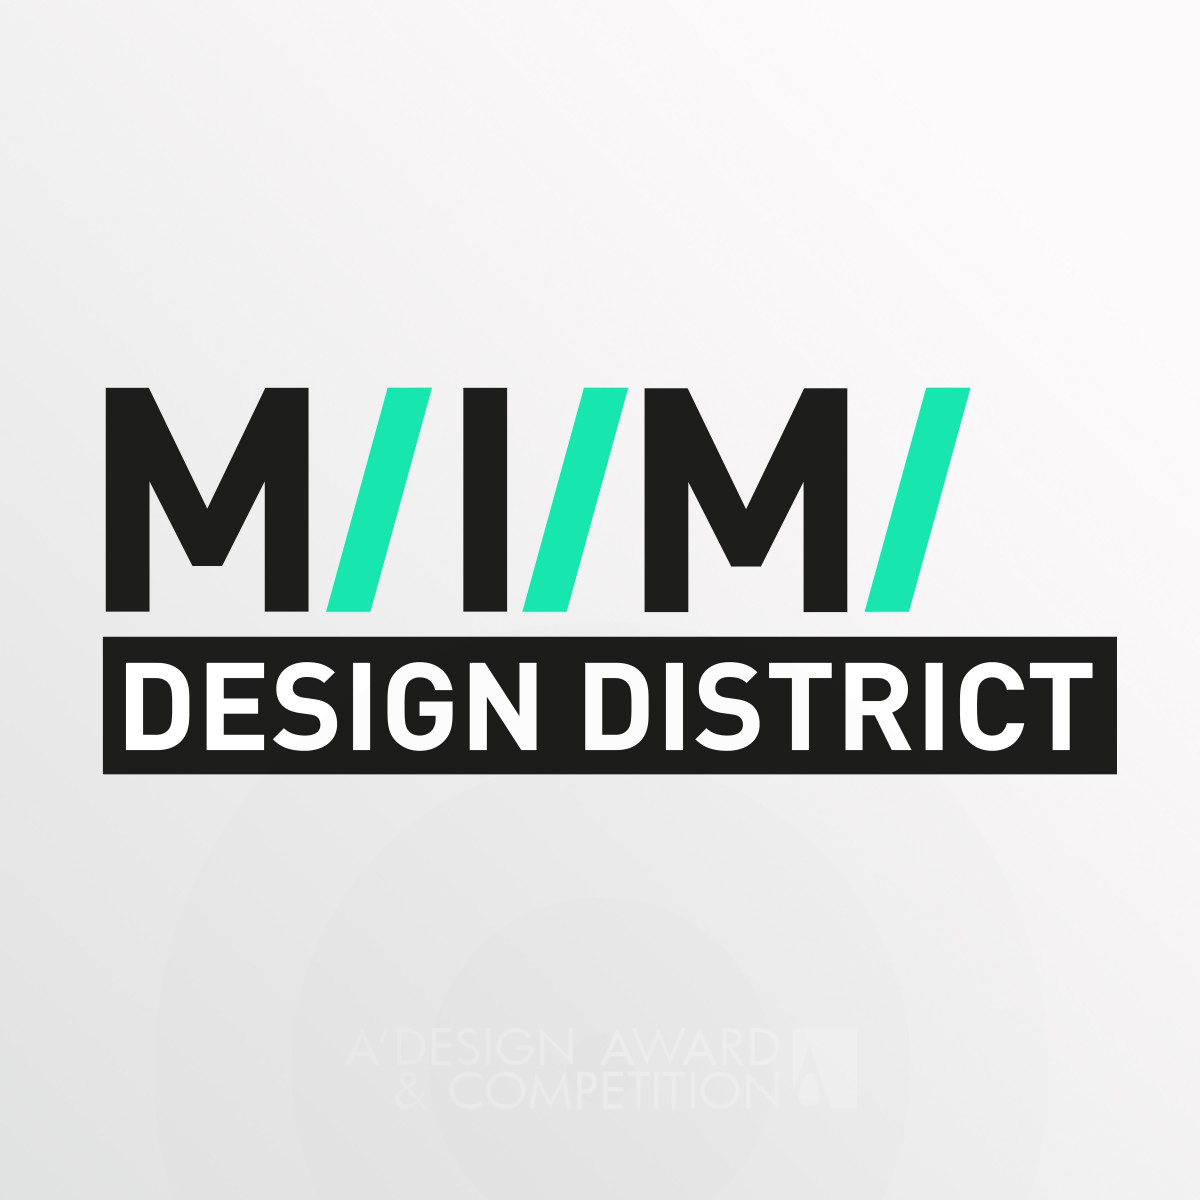 M/I/M/ Design District Corporate Identity